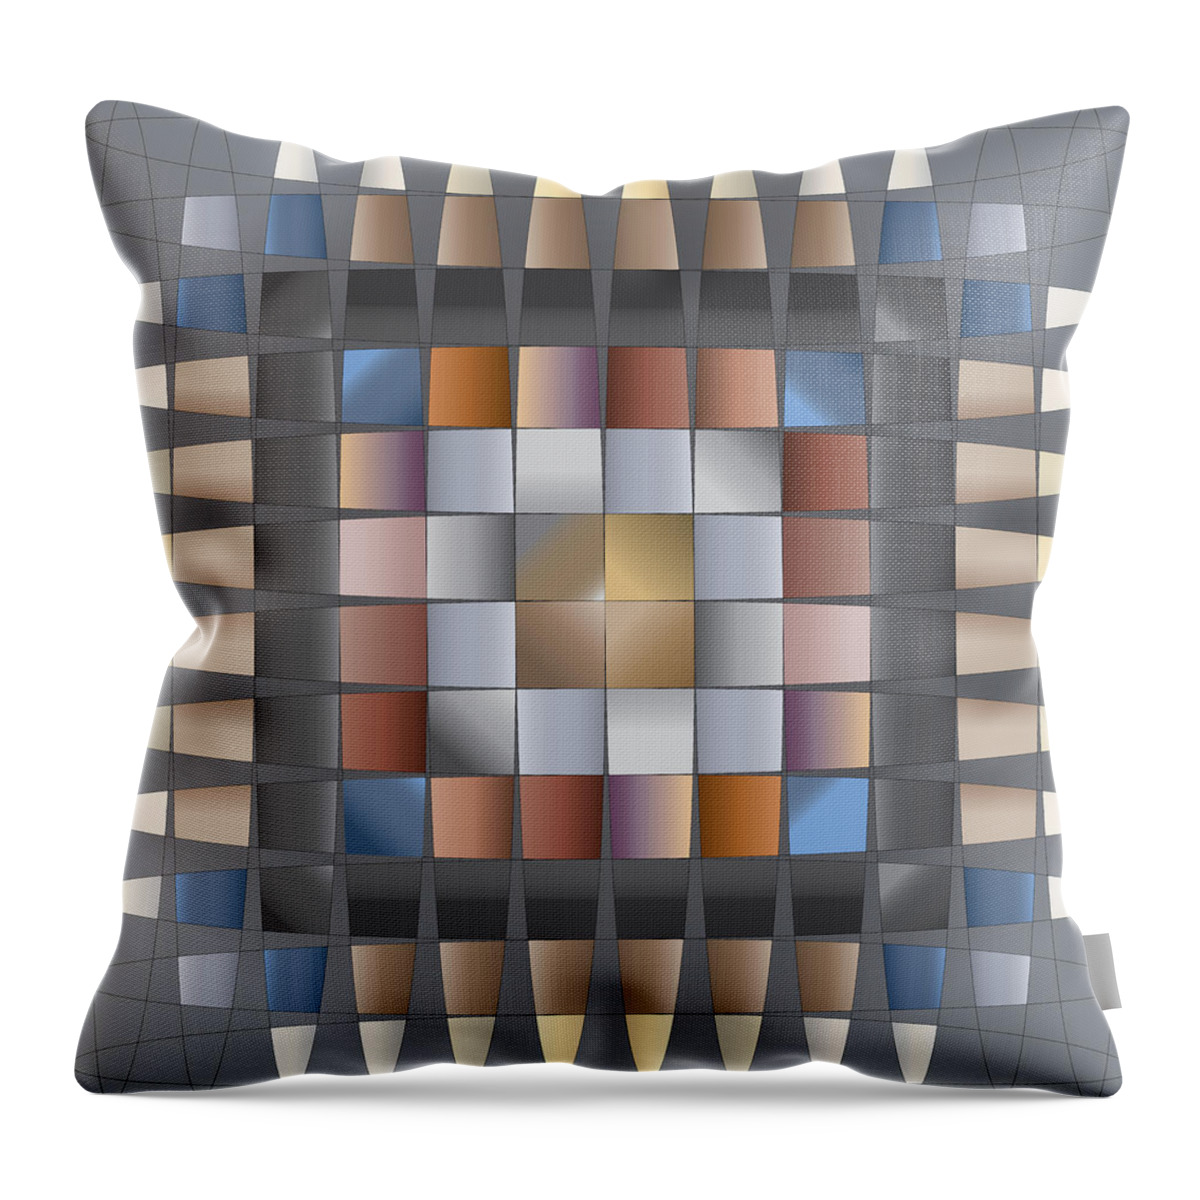 Earthtone Throw Pillow featuring the digital art Bead Tone Quilt by Kevin McLaughlin